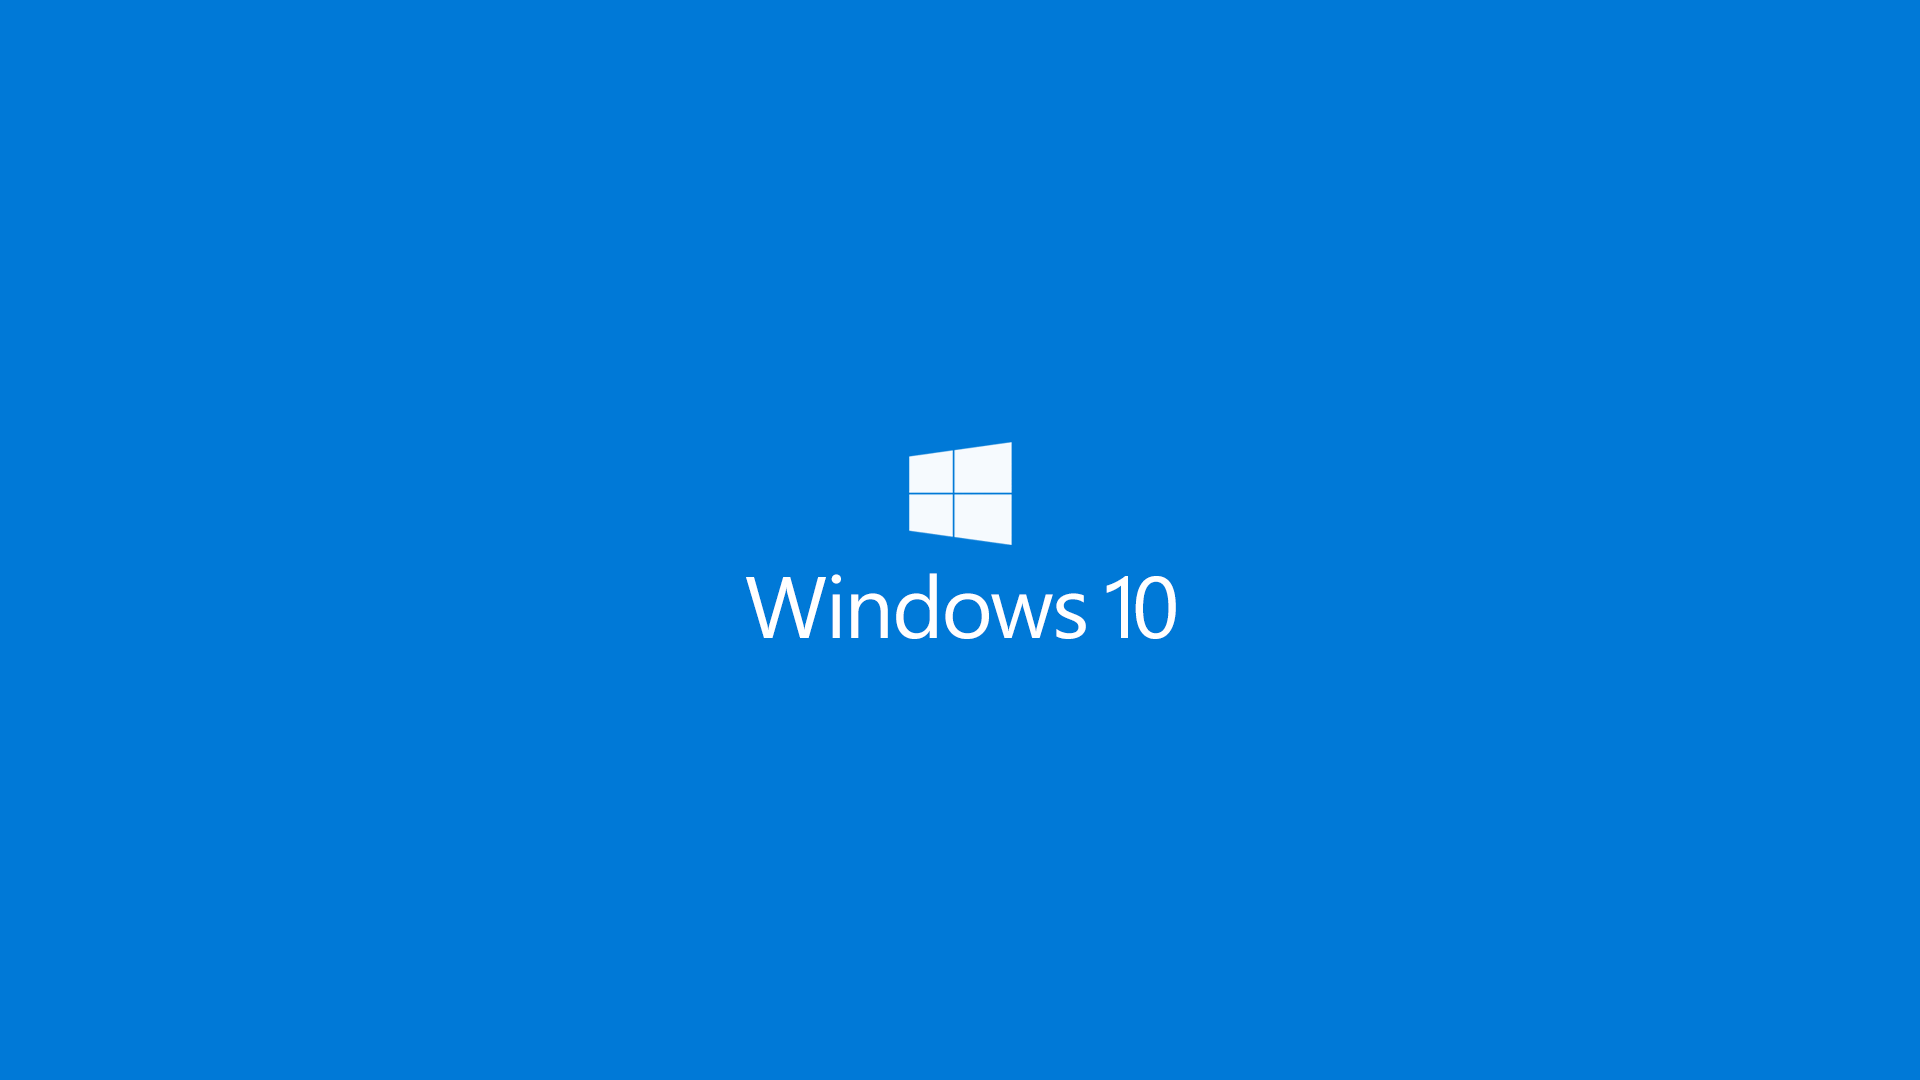 Windows 10 command promt